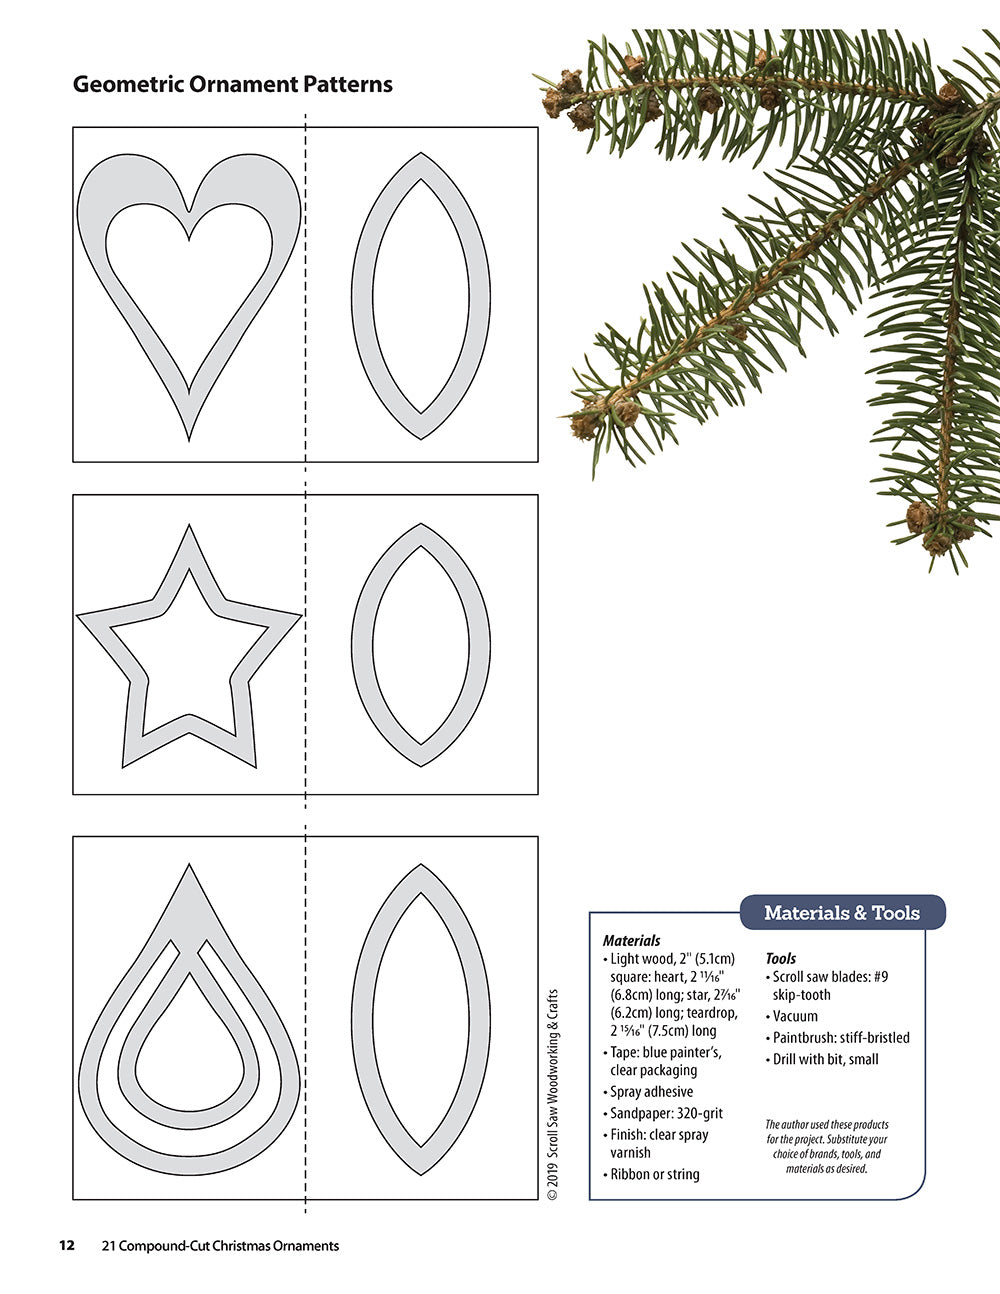 21 Compound-Cut Christmas Ornaments